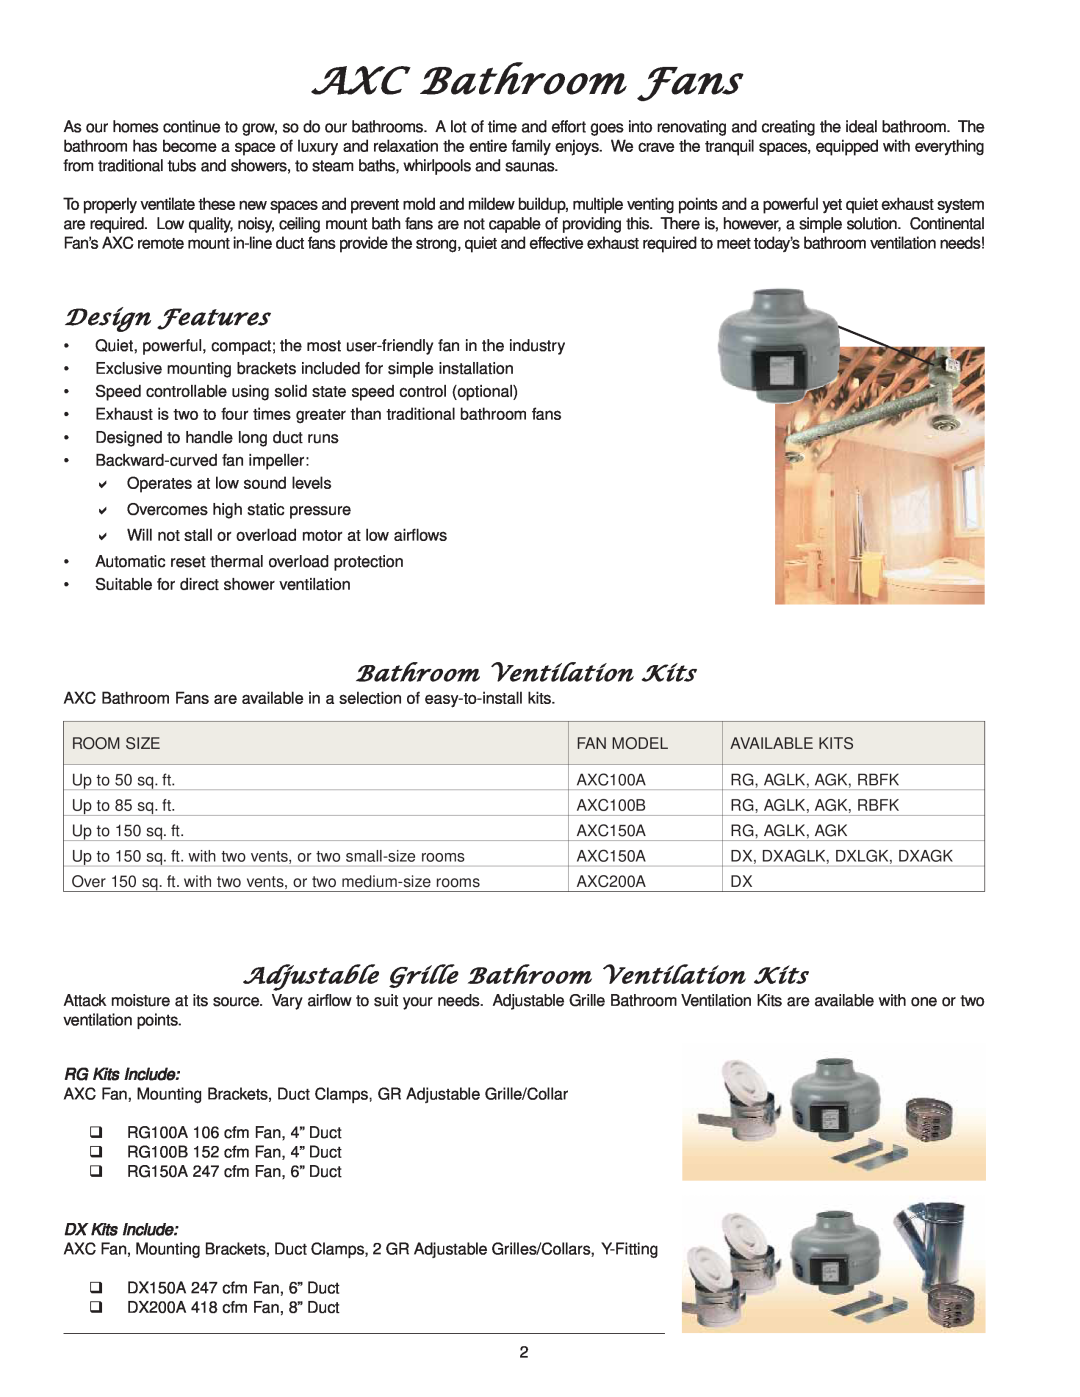 CFM AXC100B manual AXC Bathroom Fans, Design Features, Adjustable Grille Bathroom Ventilation Kits, RG Kits Include 